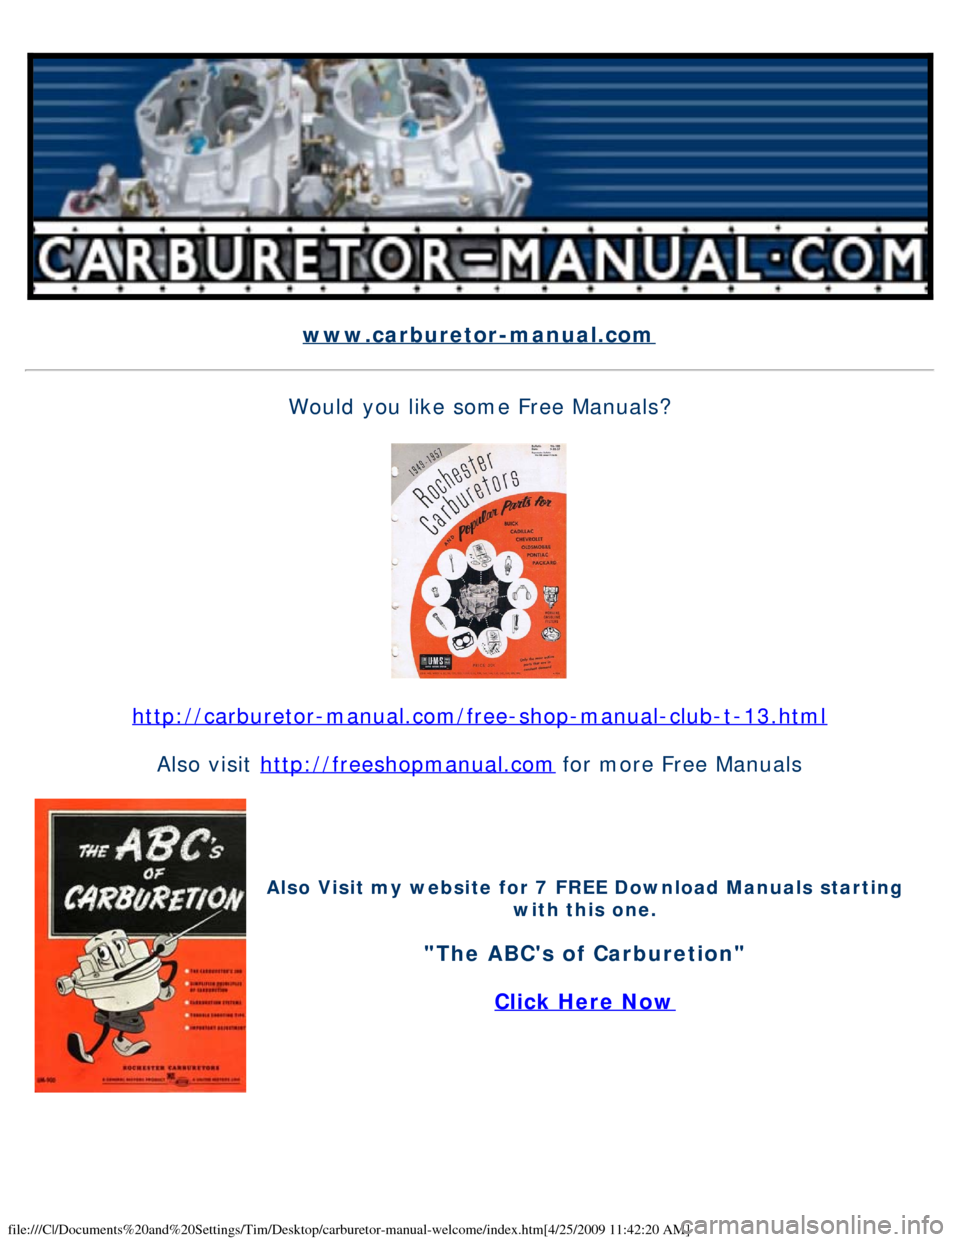 CHEVROLET CORVAIR 1960 1.G Owners Manual file:///C|/Documents%20and%20Settings/Tim/Desktop/carburetor-manual-welc\
ome/index.htm[4/25/2009 11:42:20 AM]
www.carburetor-manual.com
Would you like some Free Manuals?
http://carburetor-manual.com/